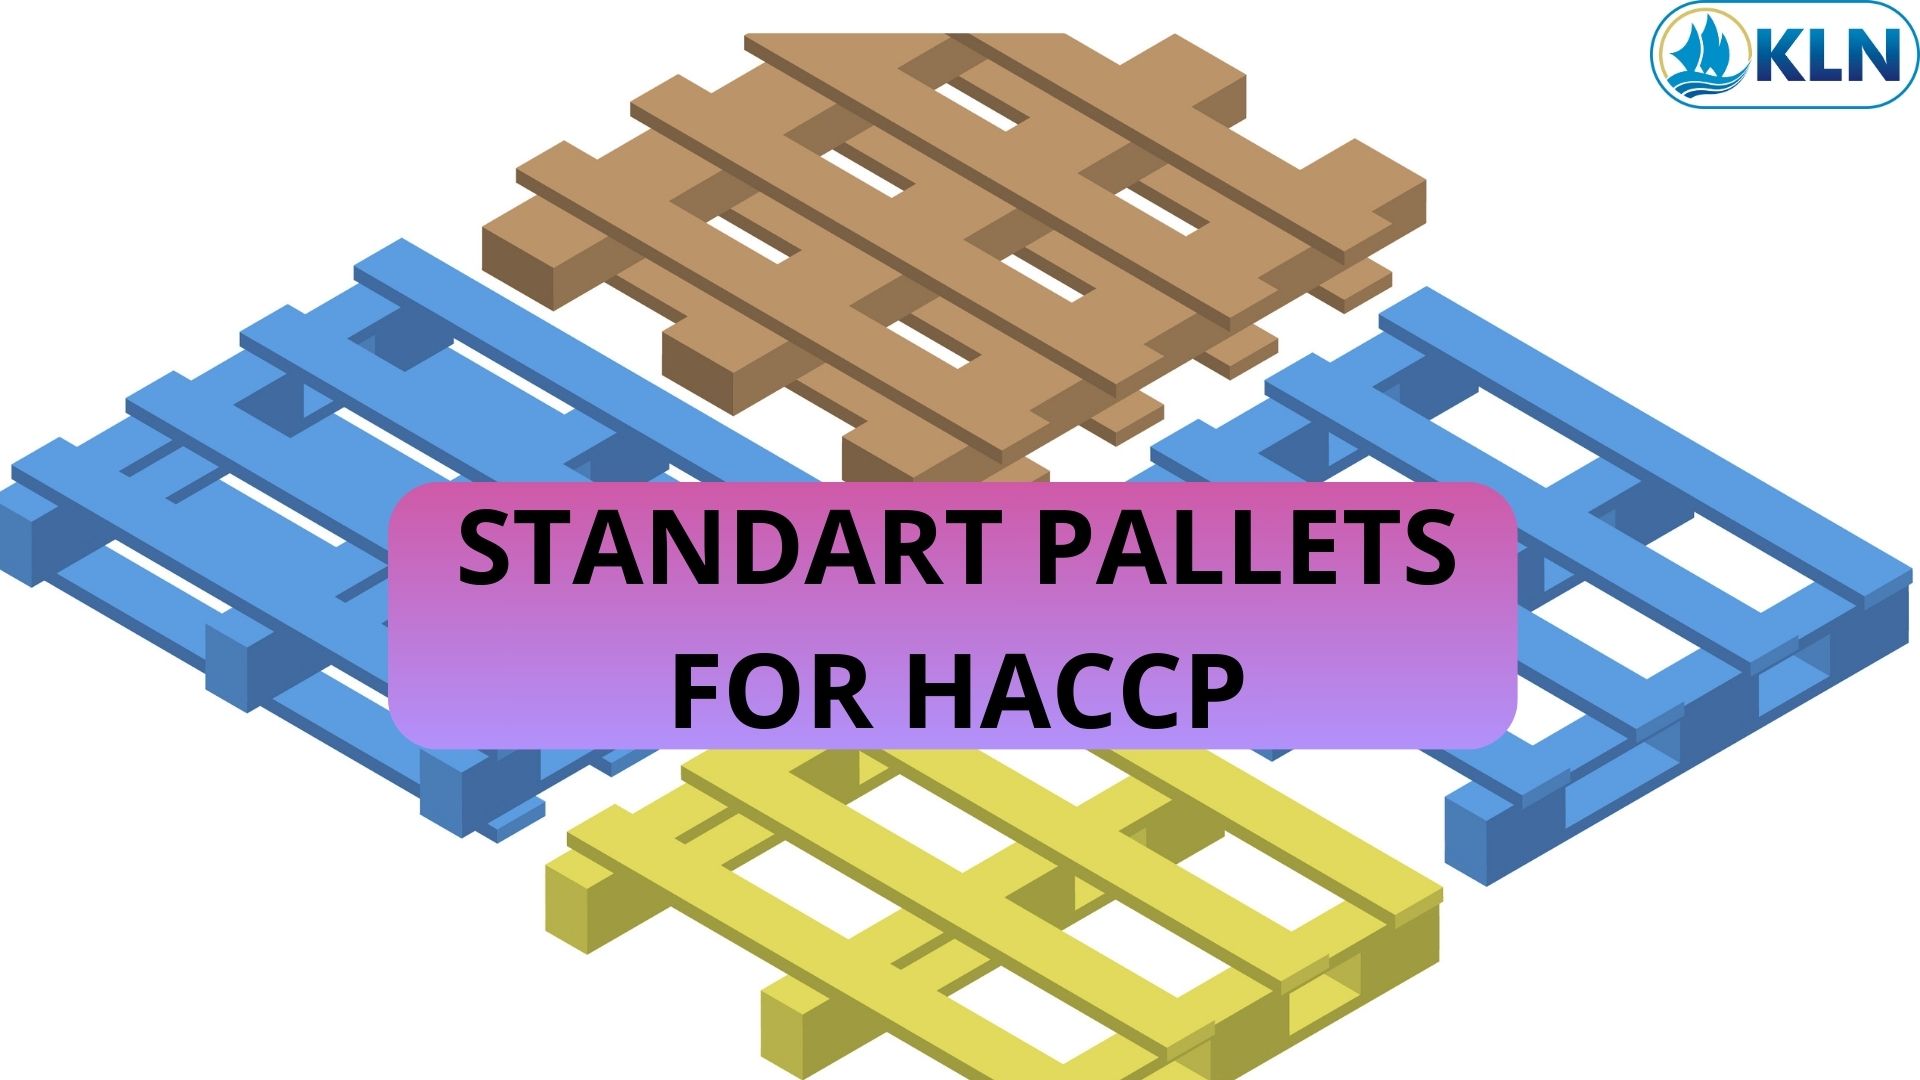 STANDART PALLETS FOR HACCP